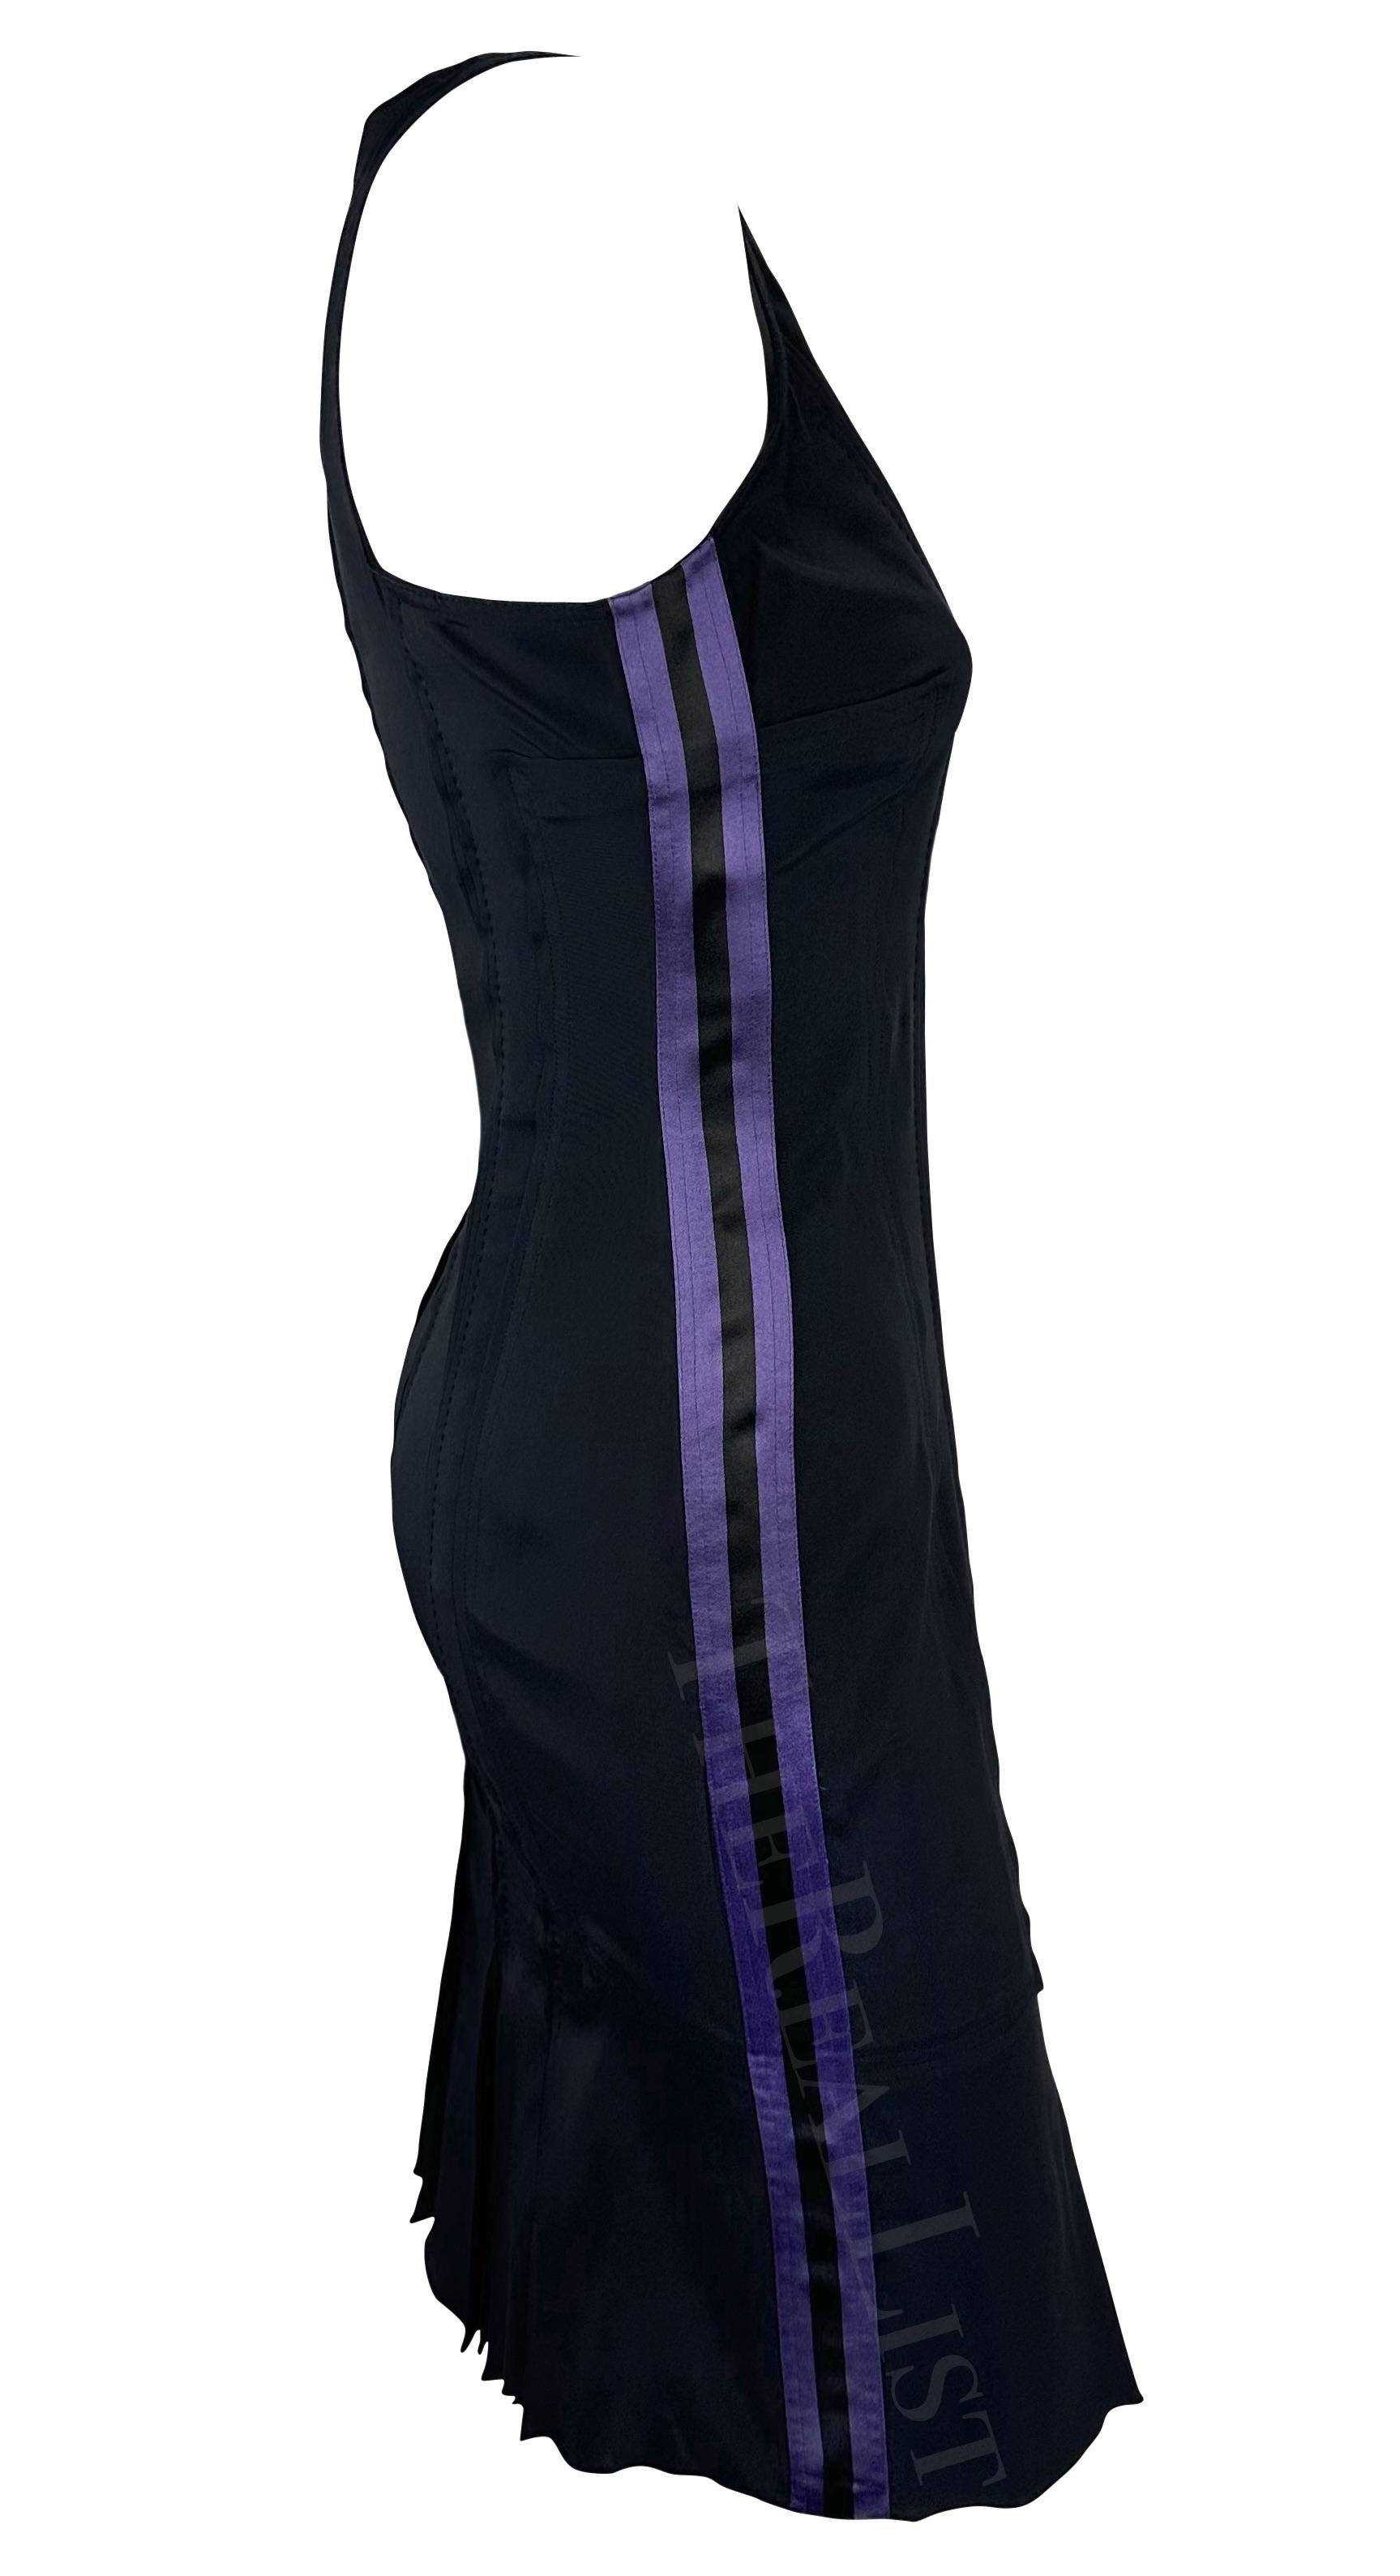 Women's S/S 2004 Gucci by Tom Ford Black Silk Runway Dress with Purple Satin Stripe